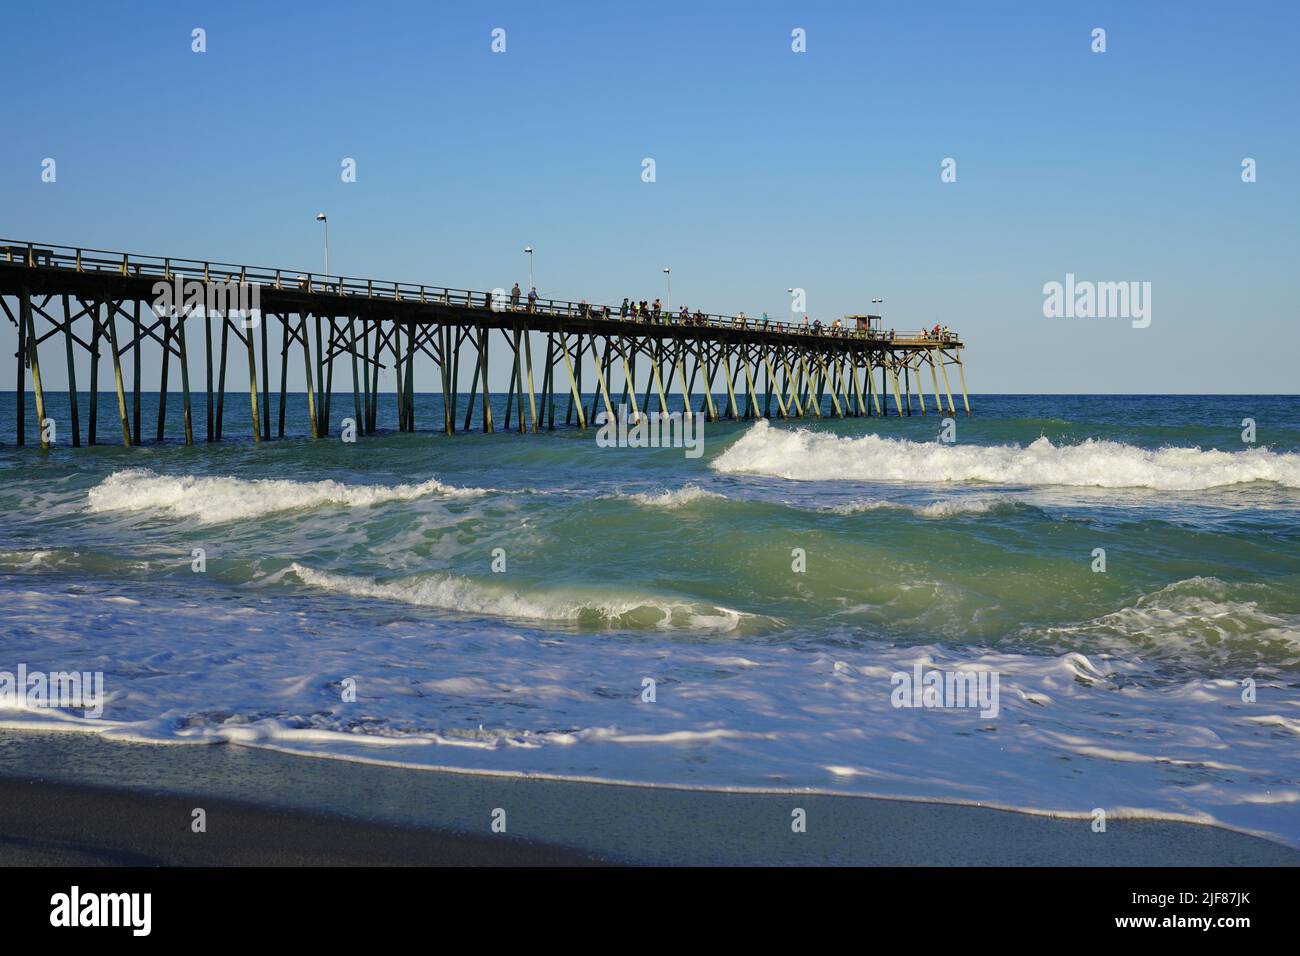 Waves on the beach at Kure Beach Pier on the North Carolina coast Stock Photo